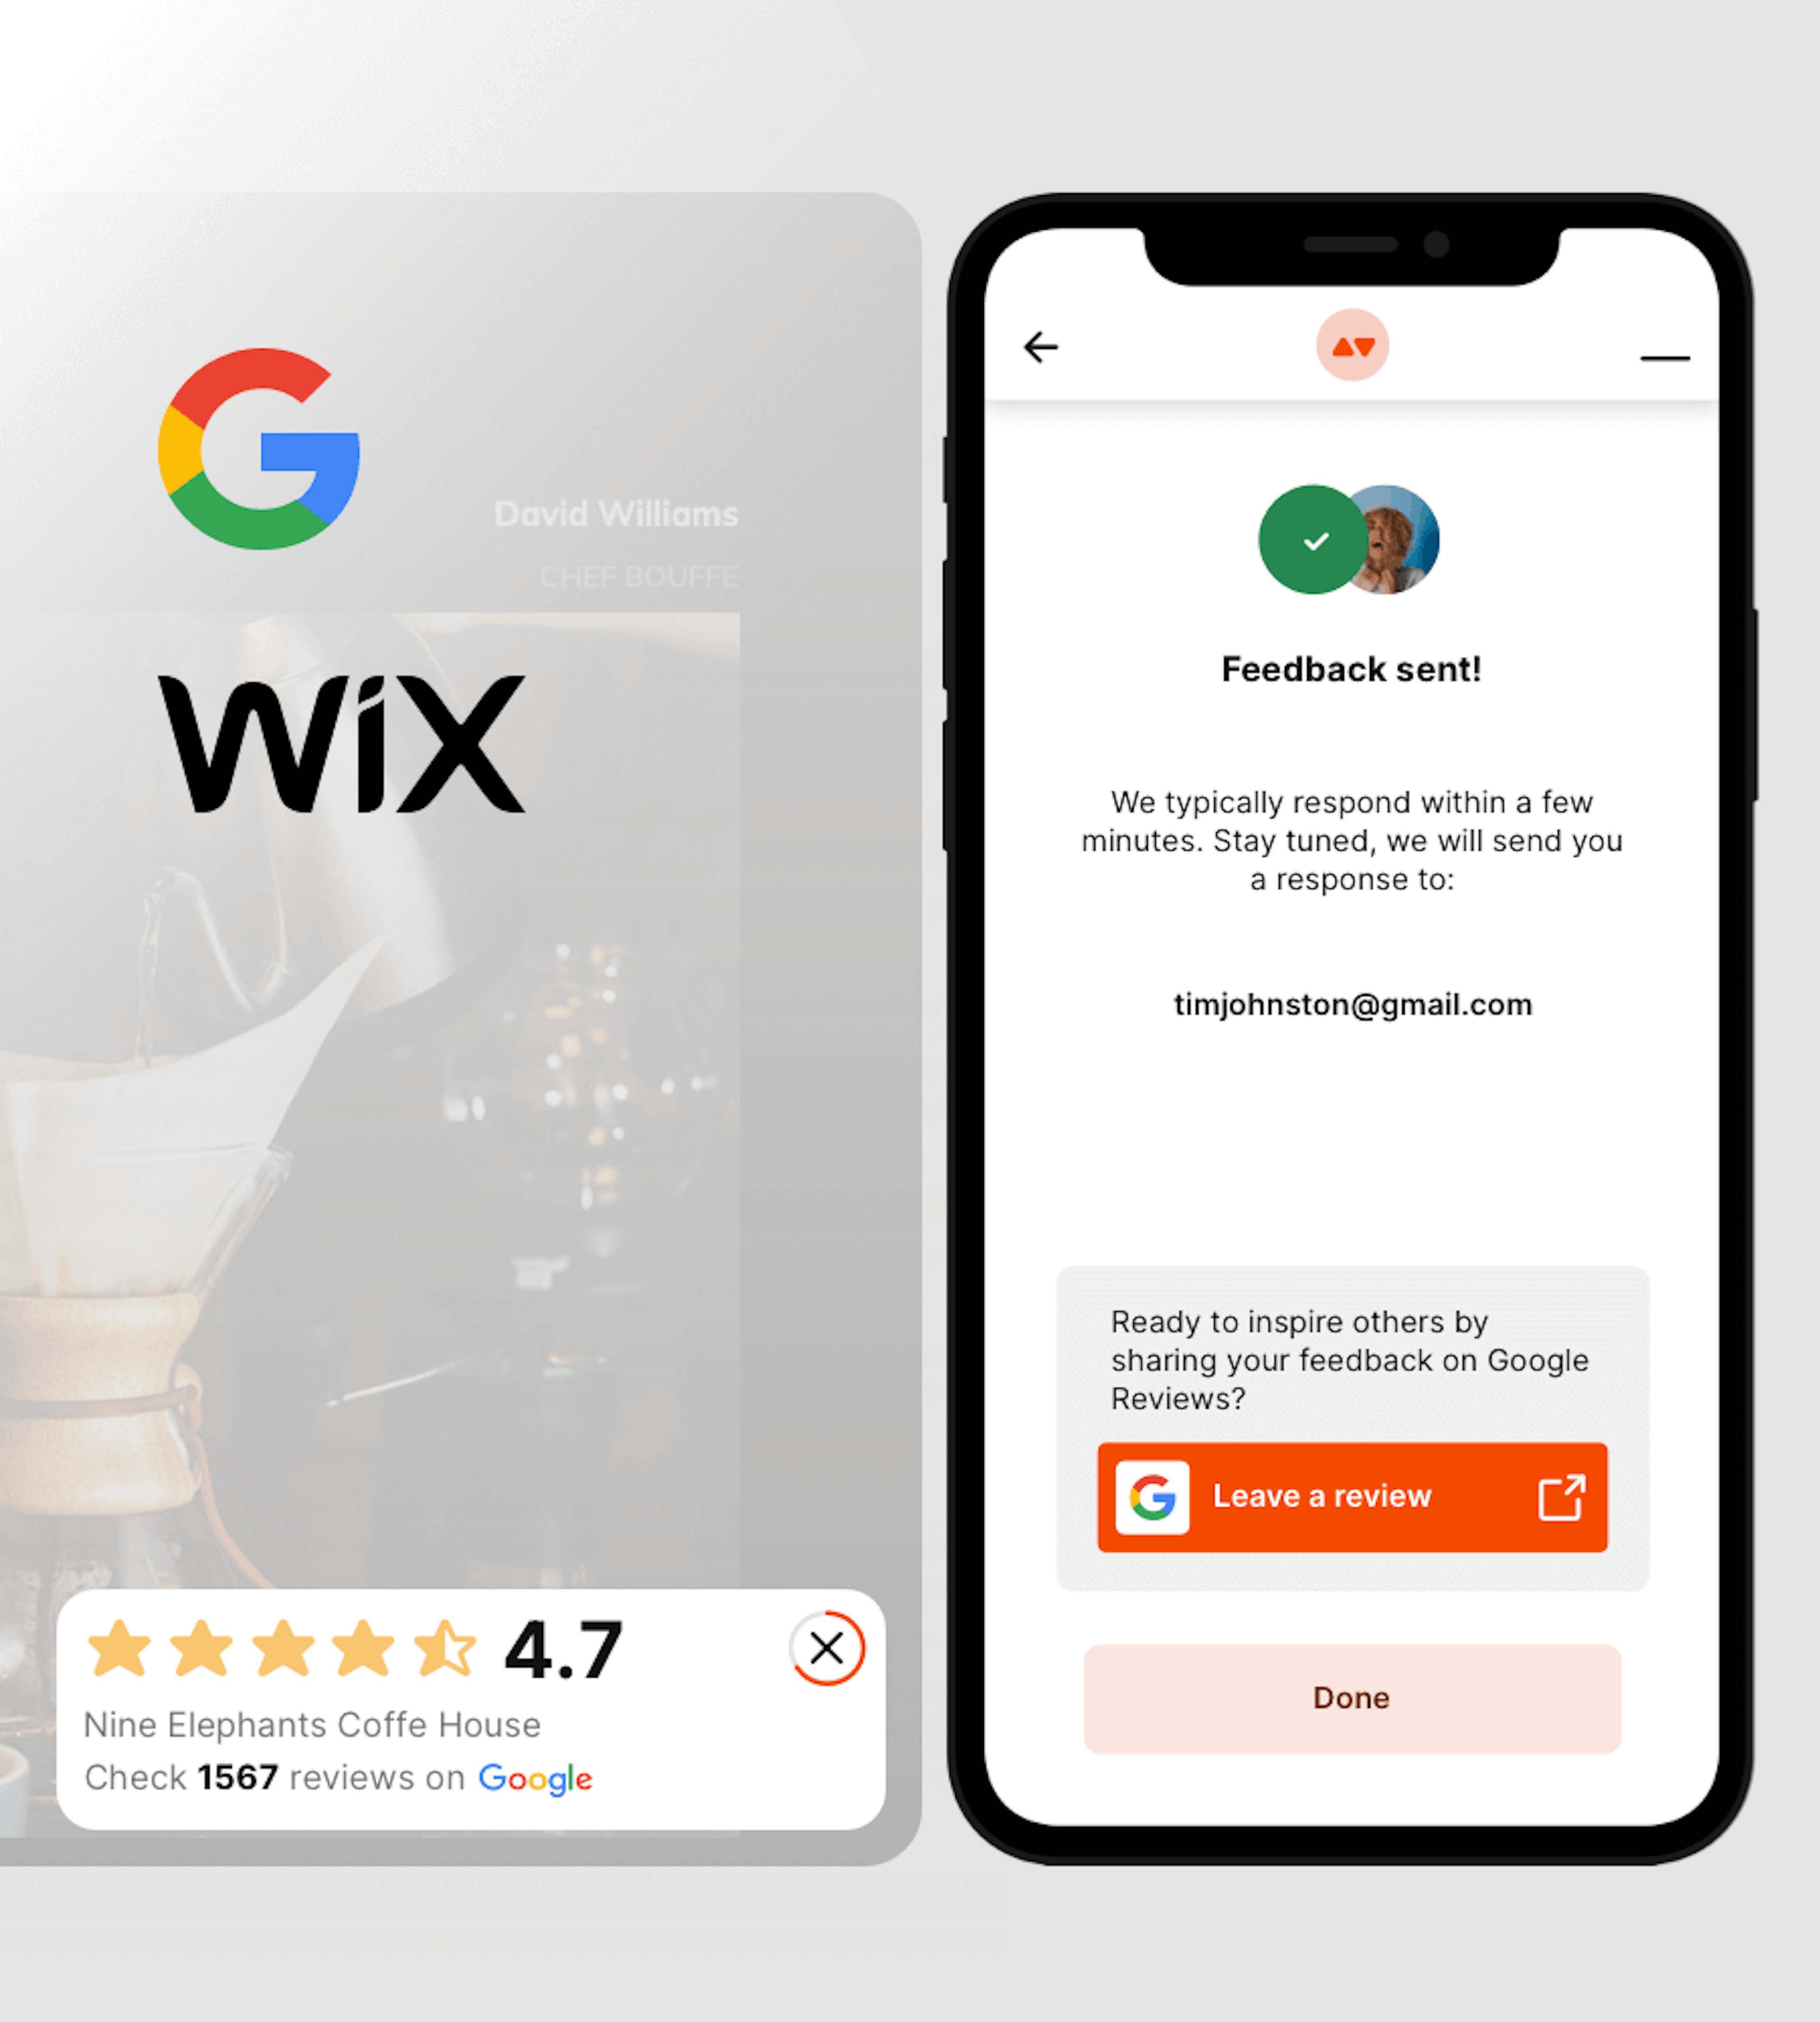 3. Configure your Google Reviews widget